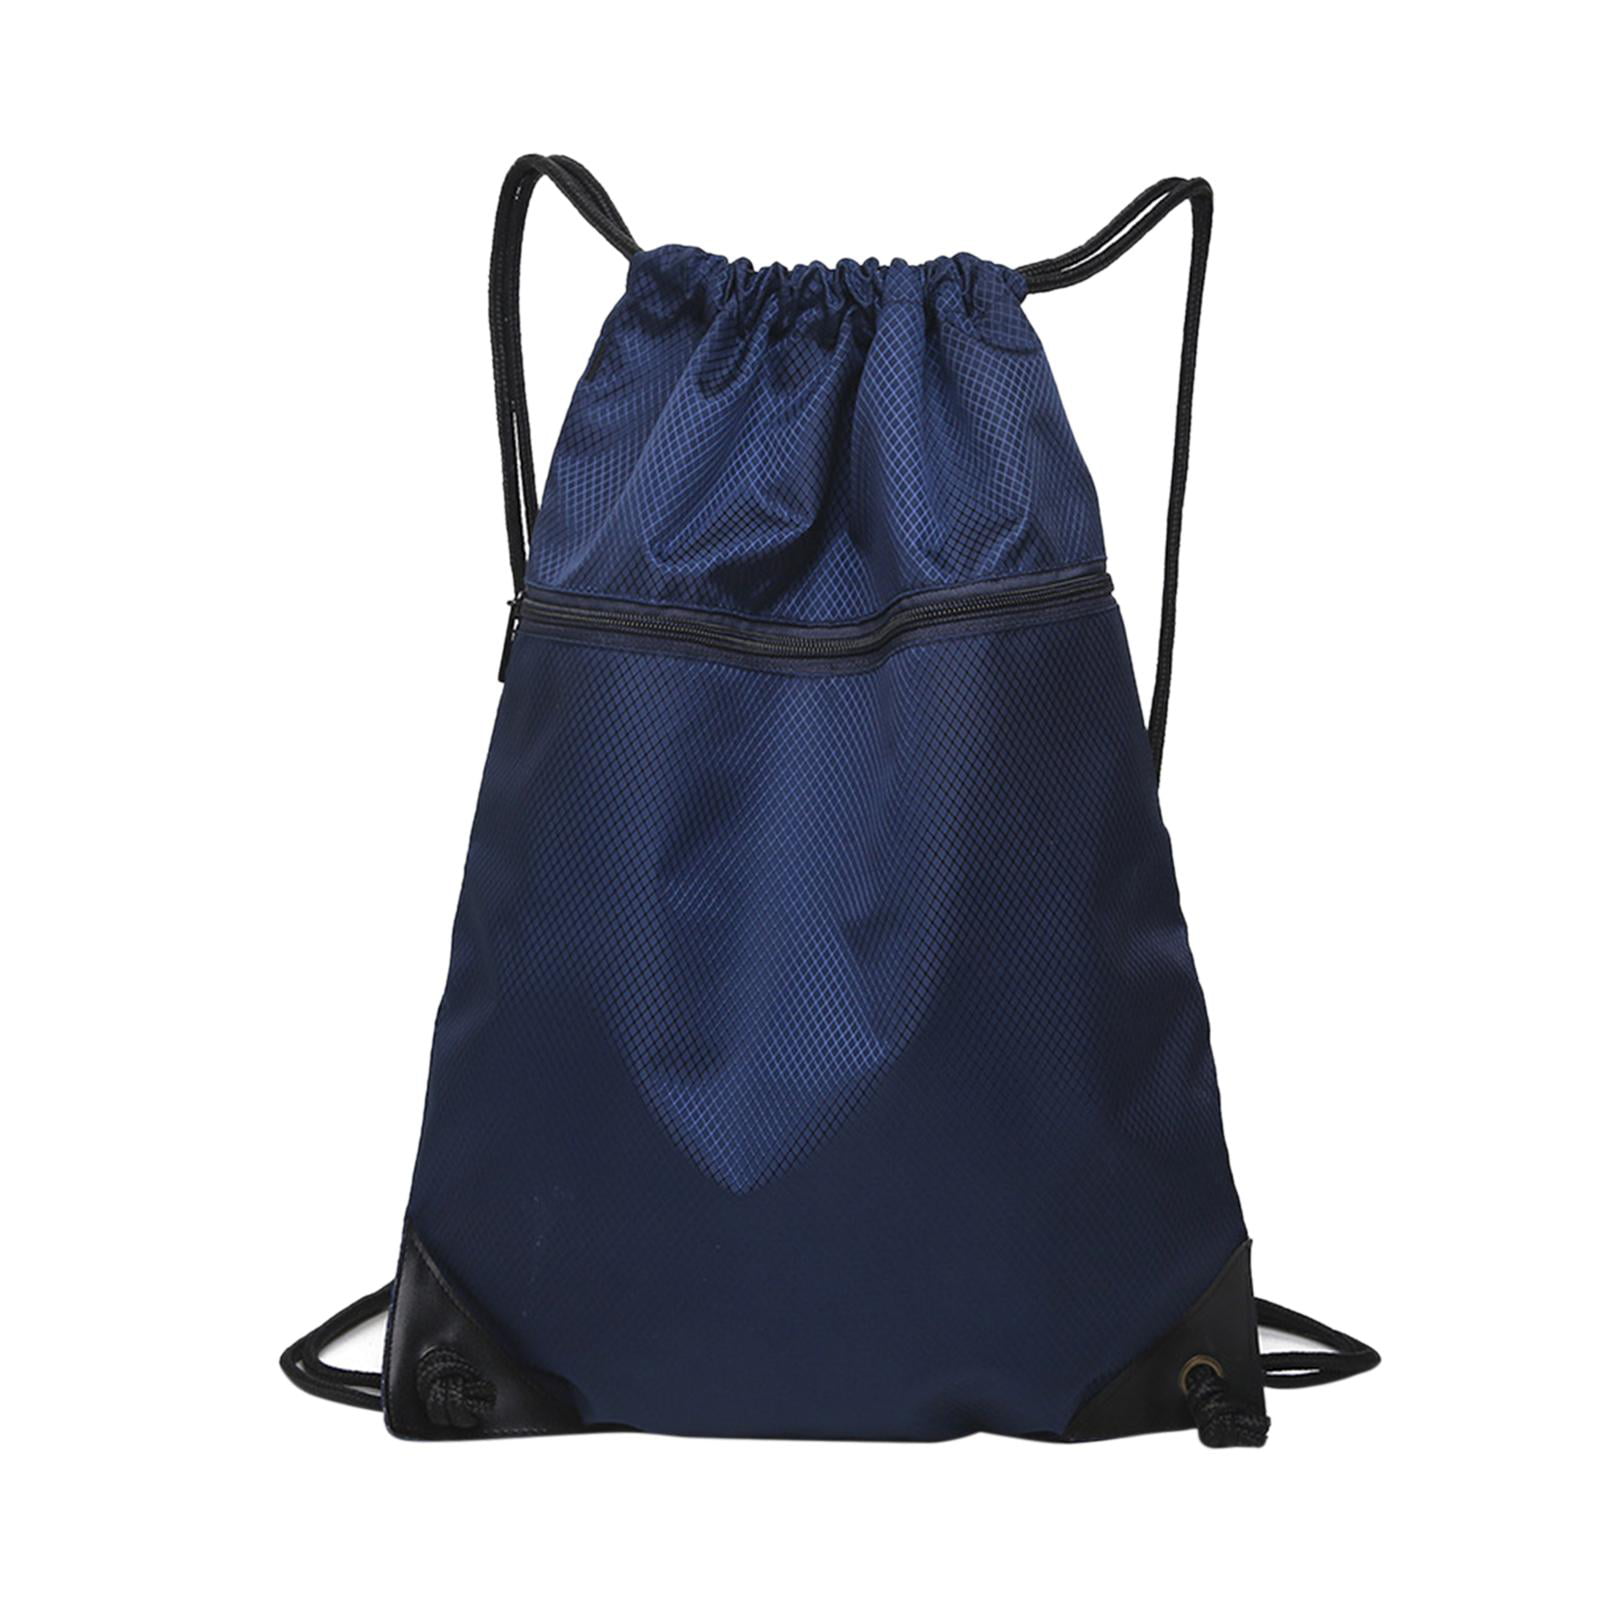 Quadra Zipped Pocket Drawstring Bag Kids PE Gym Swimming Bag Water Resistant New 